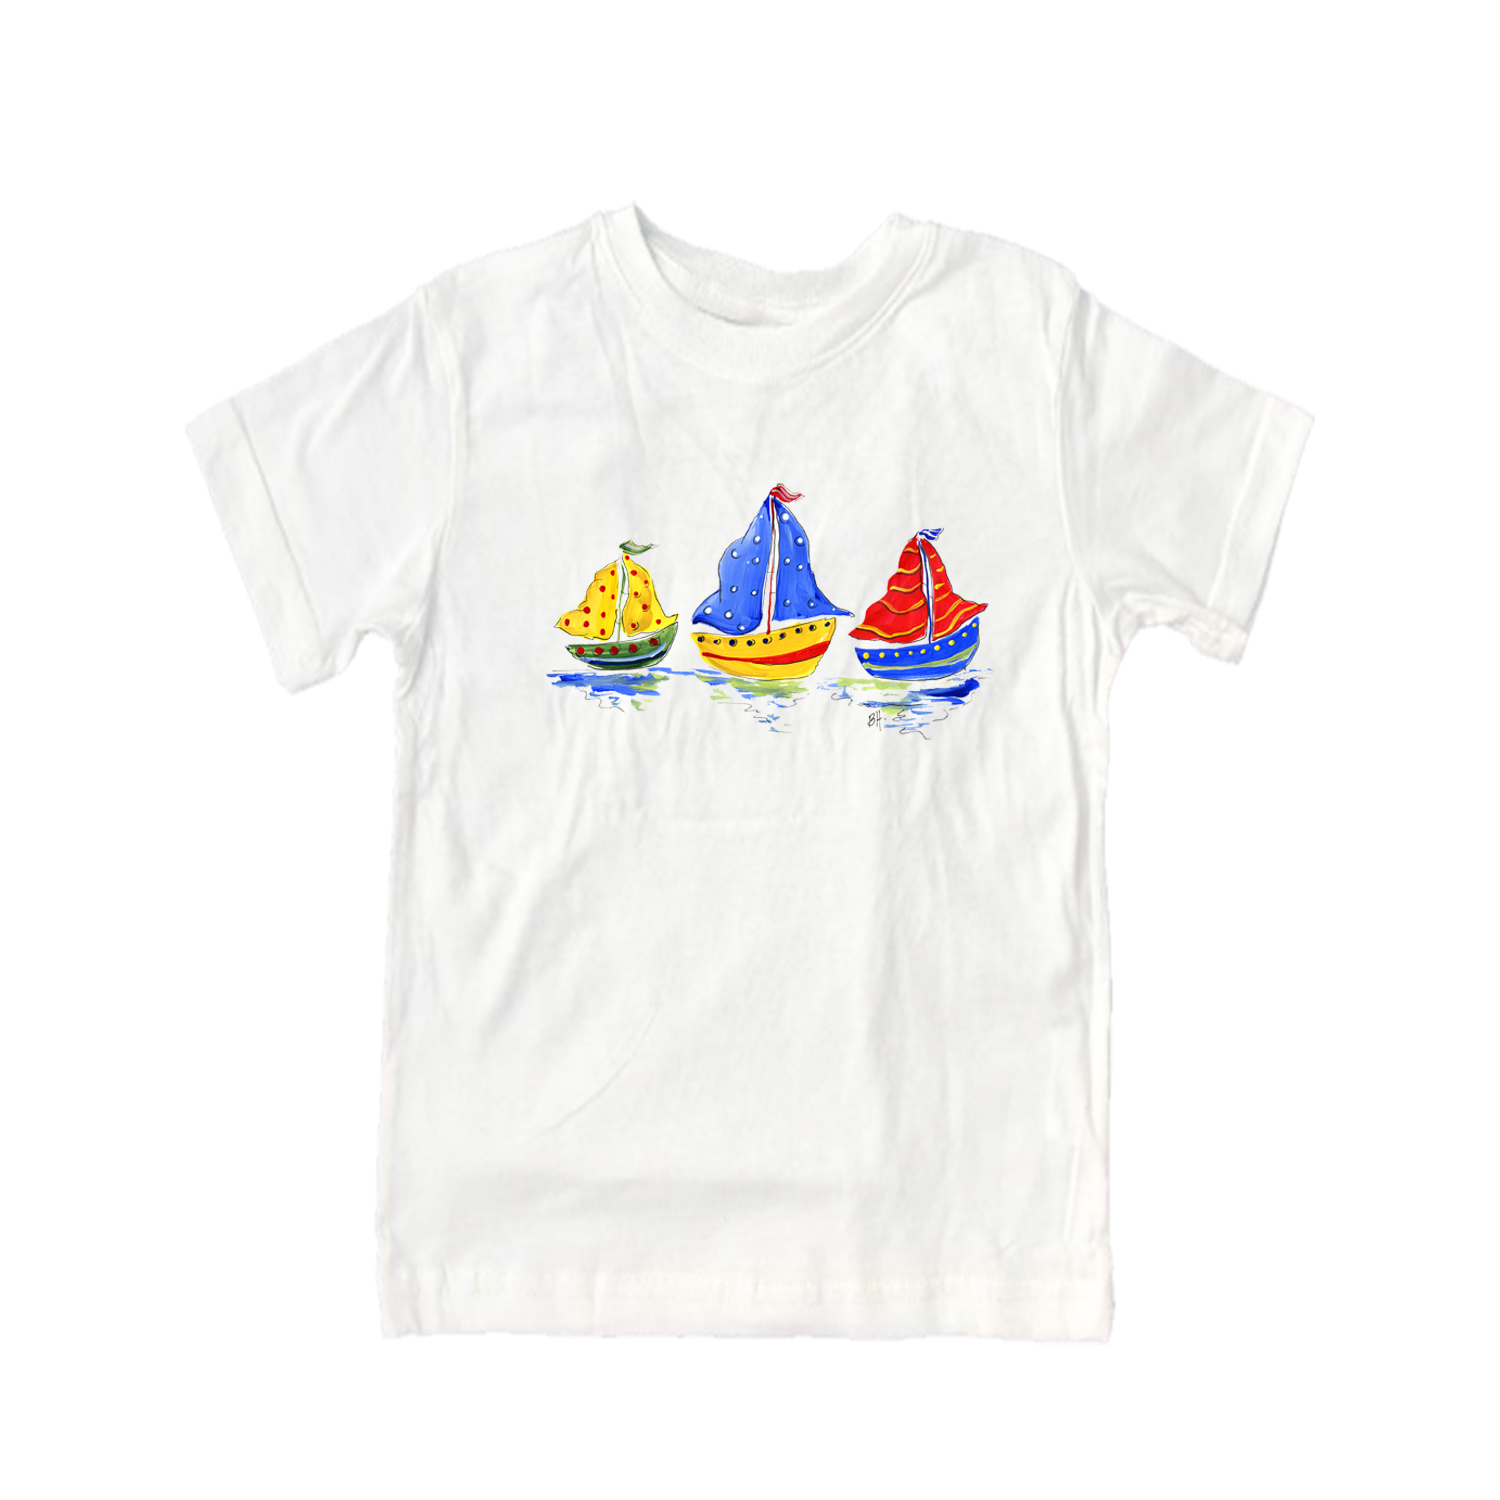 Cotton Tee Shirt Short Sleeve 53 Sailboats